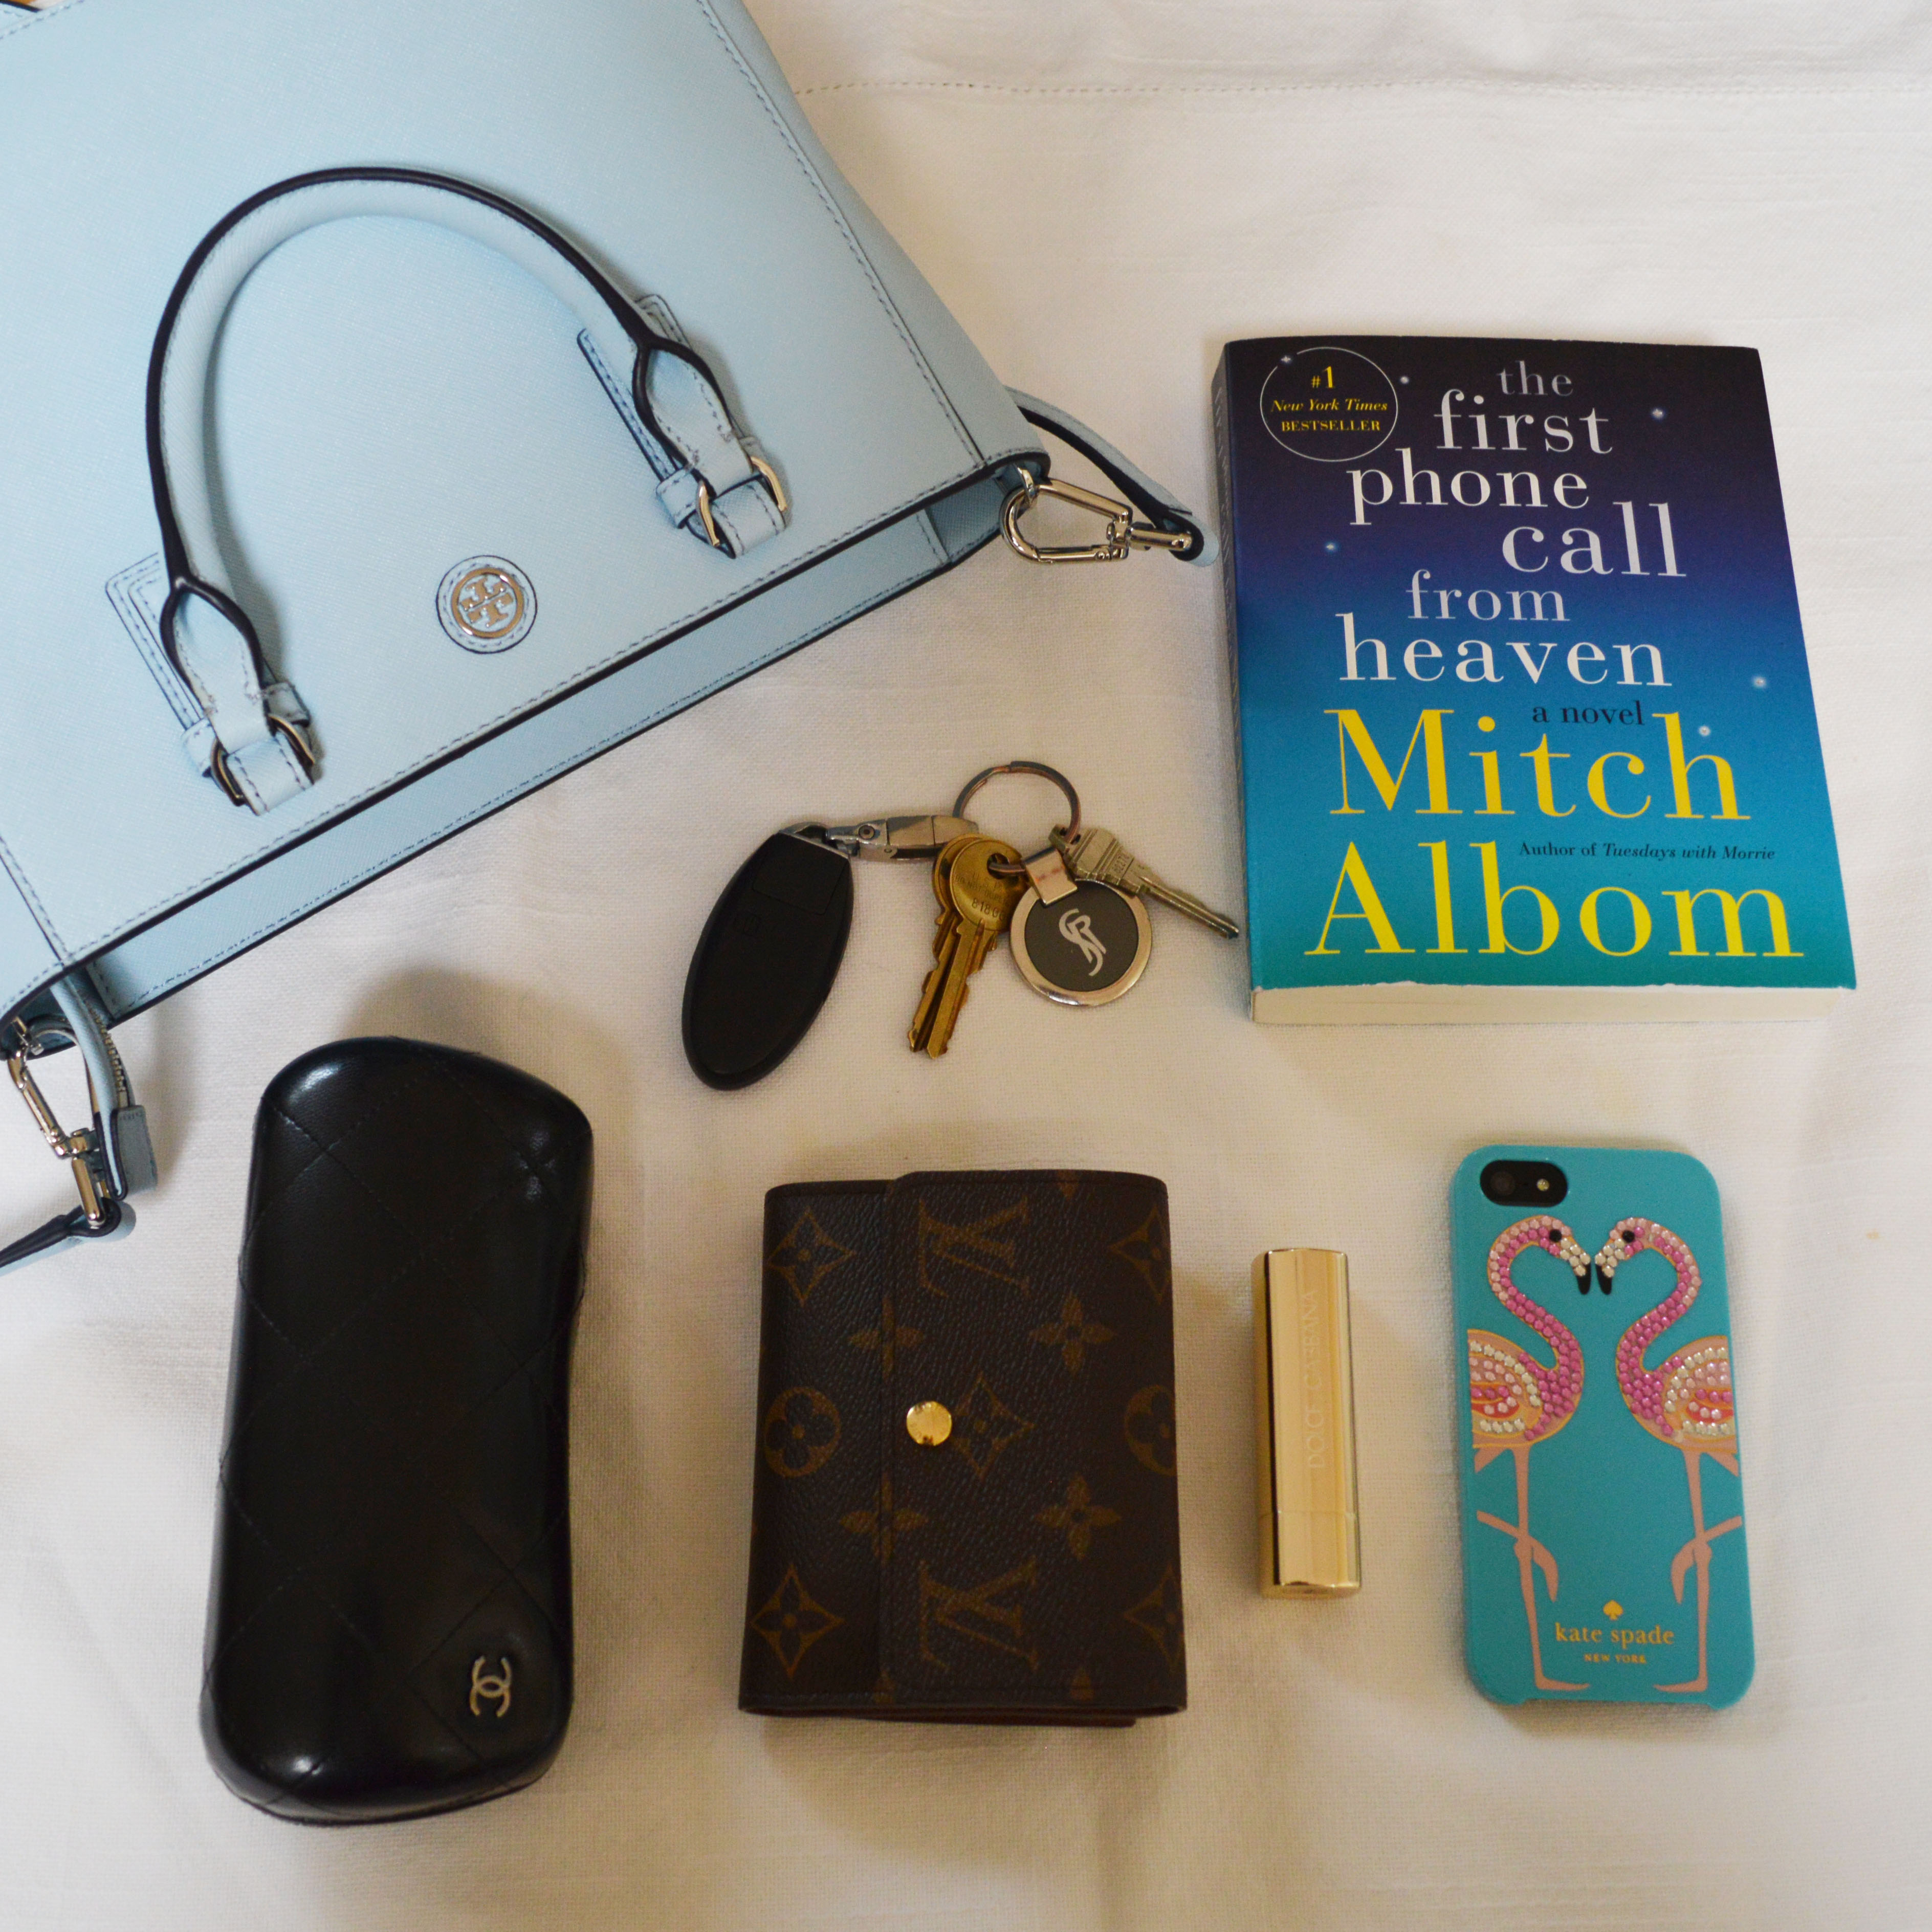 Tory Burch Robinson Mini satchel review – Bay Area Fashionista